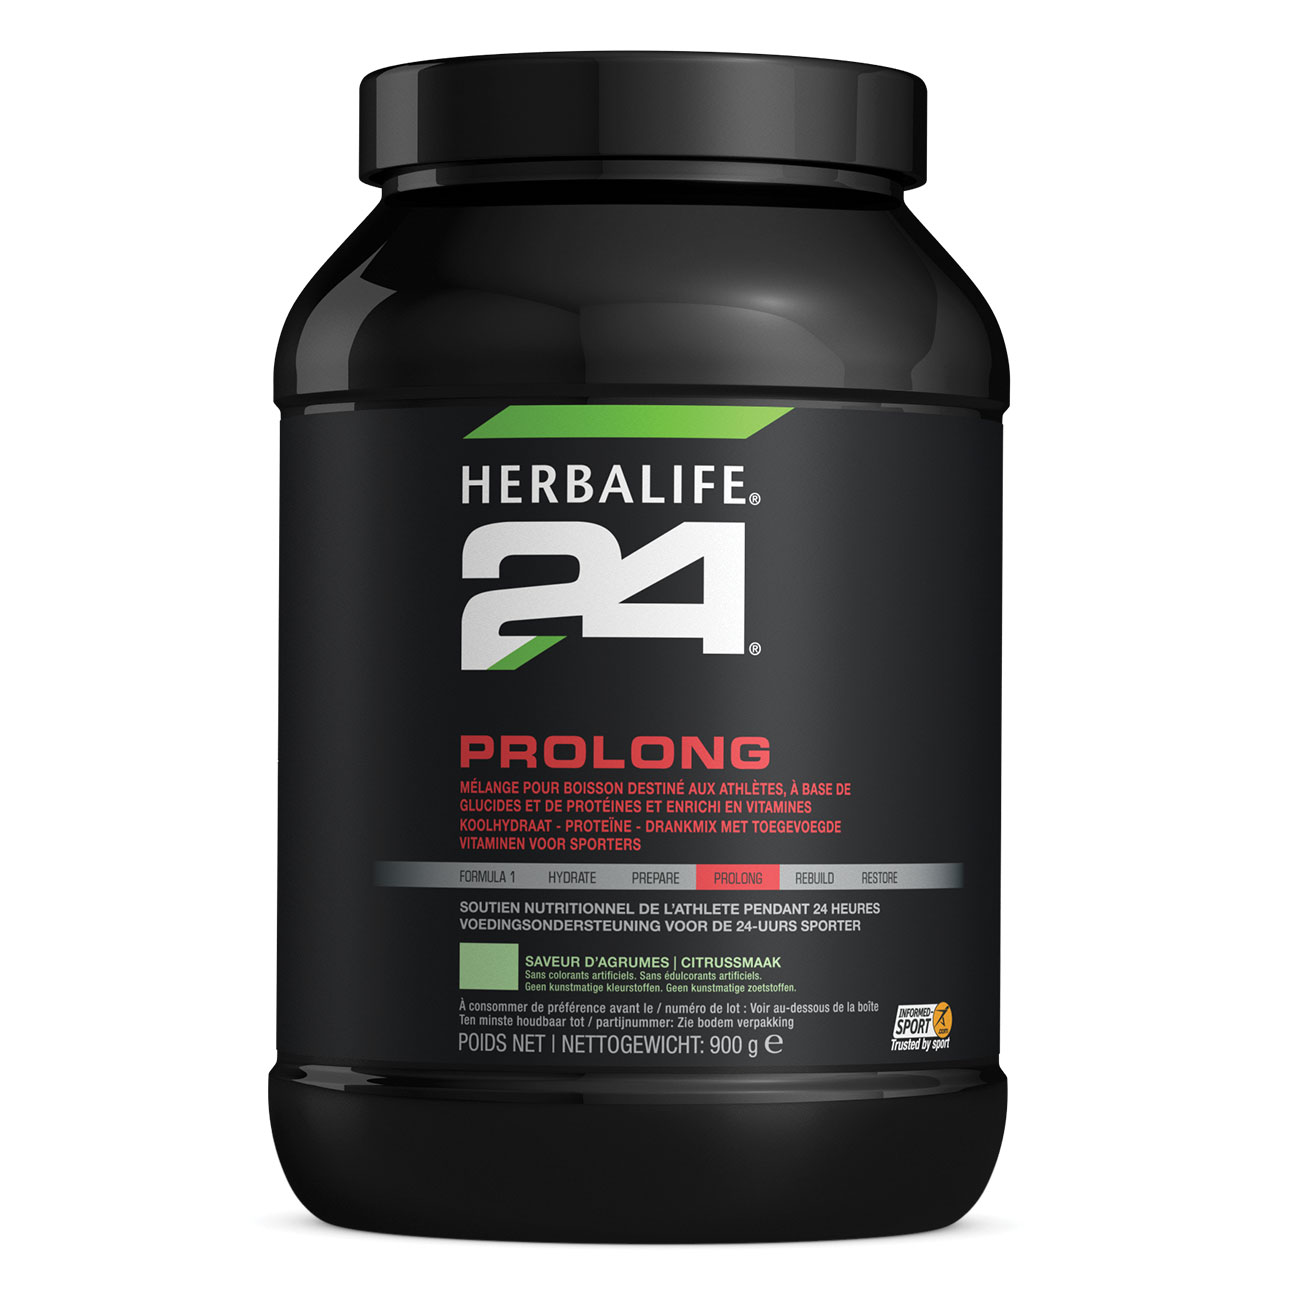 Herbalife24® Prolong proteïne drank citrussmaak product shot